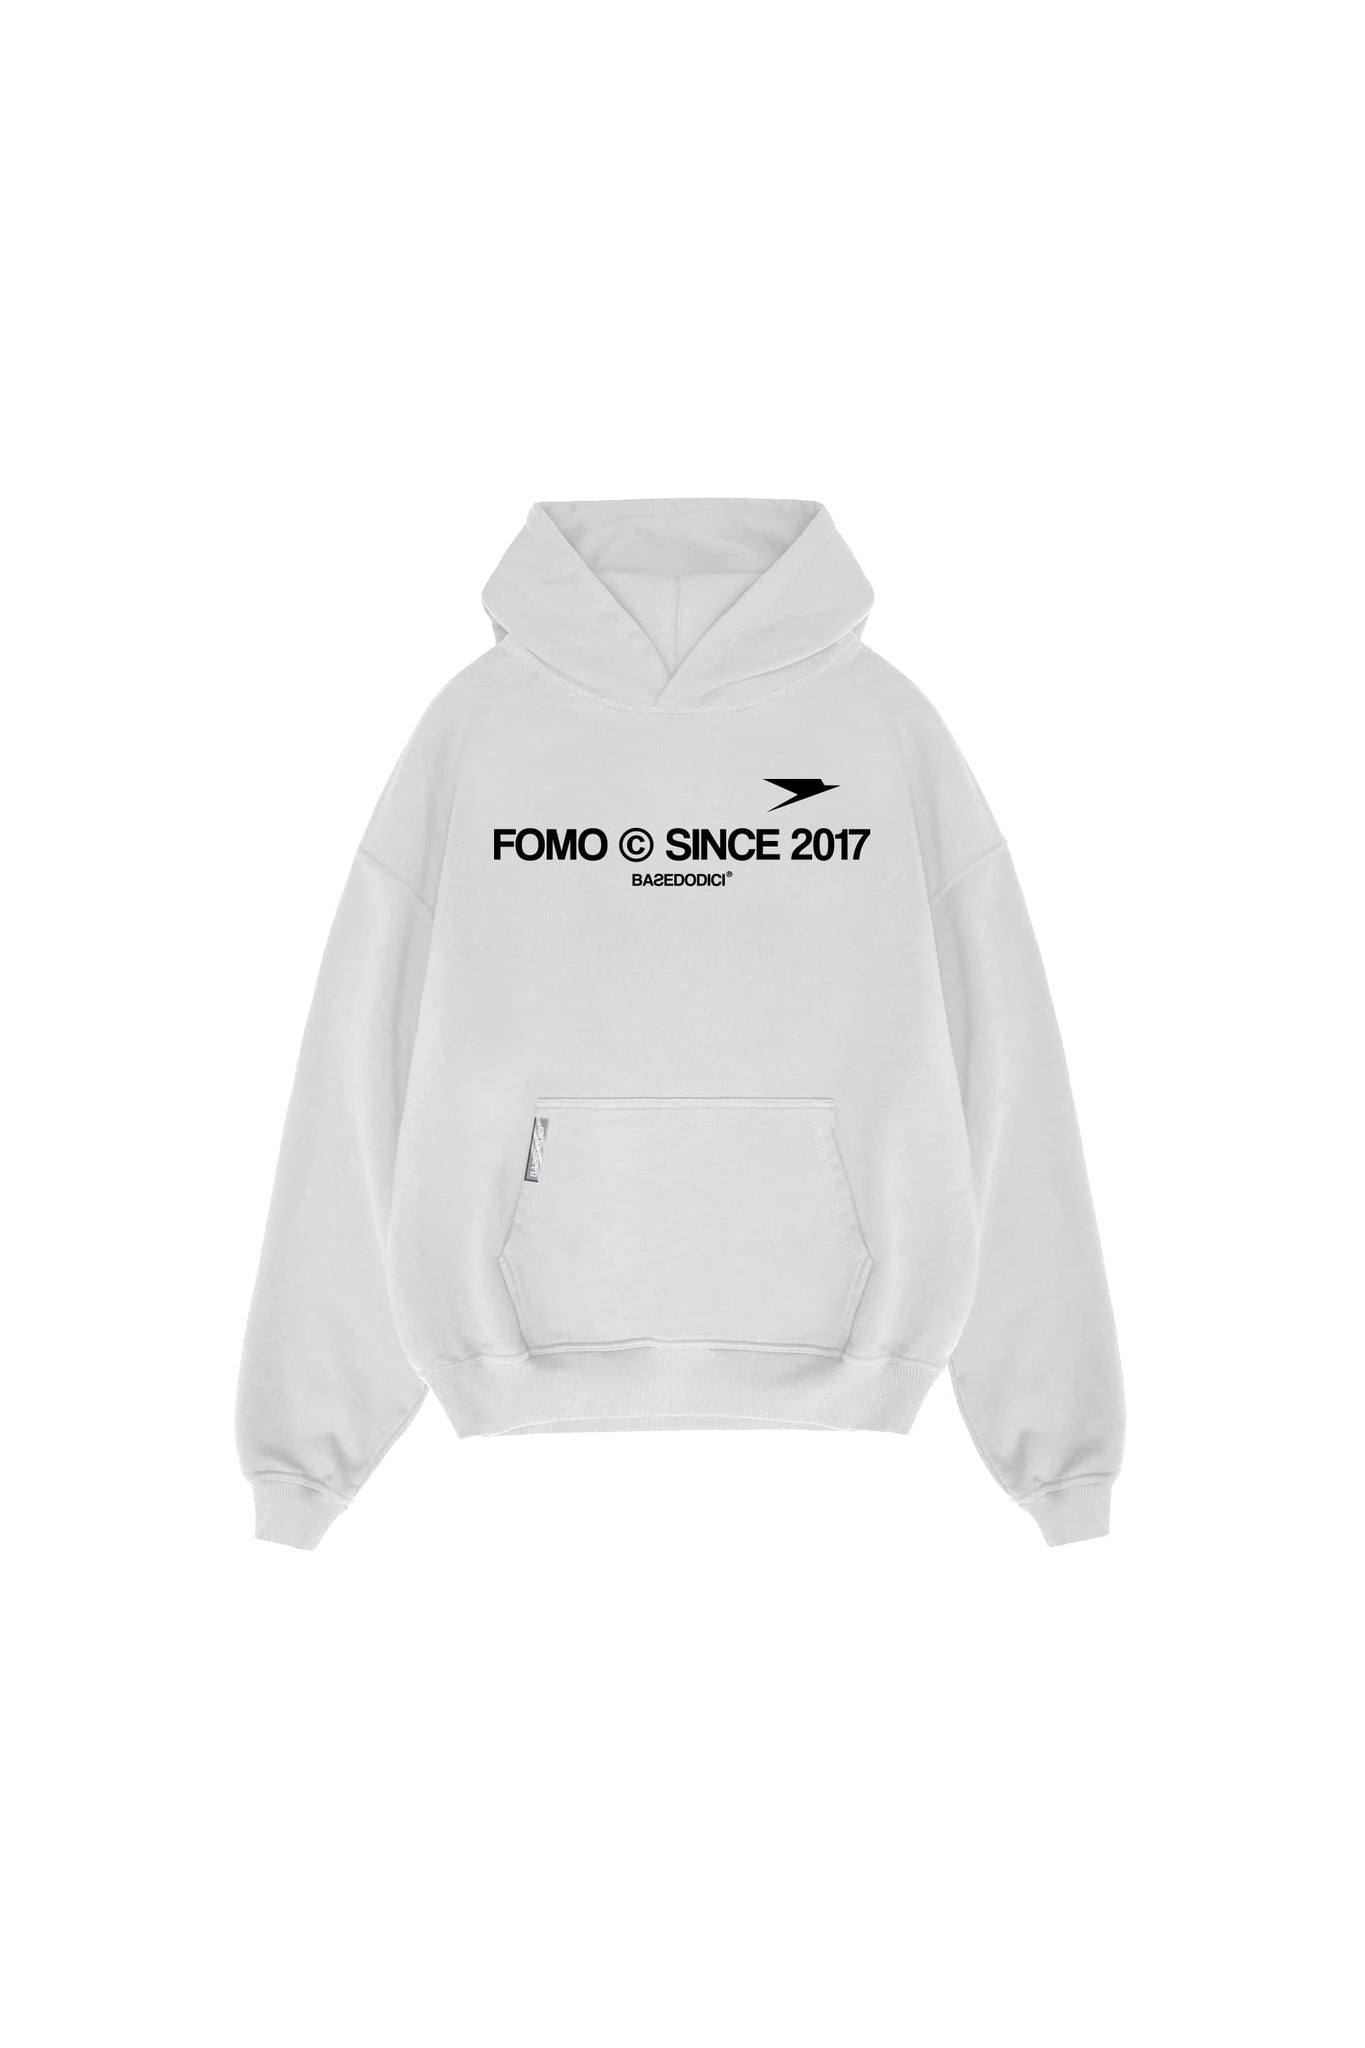 Hoodie "FOMO" Since2017 White